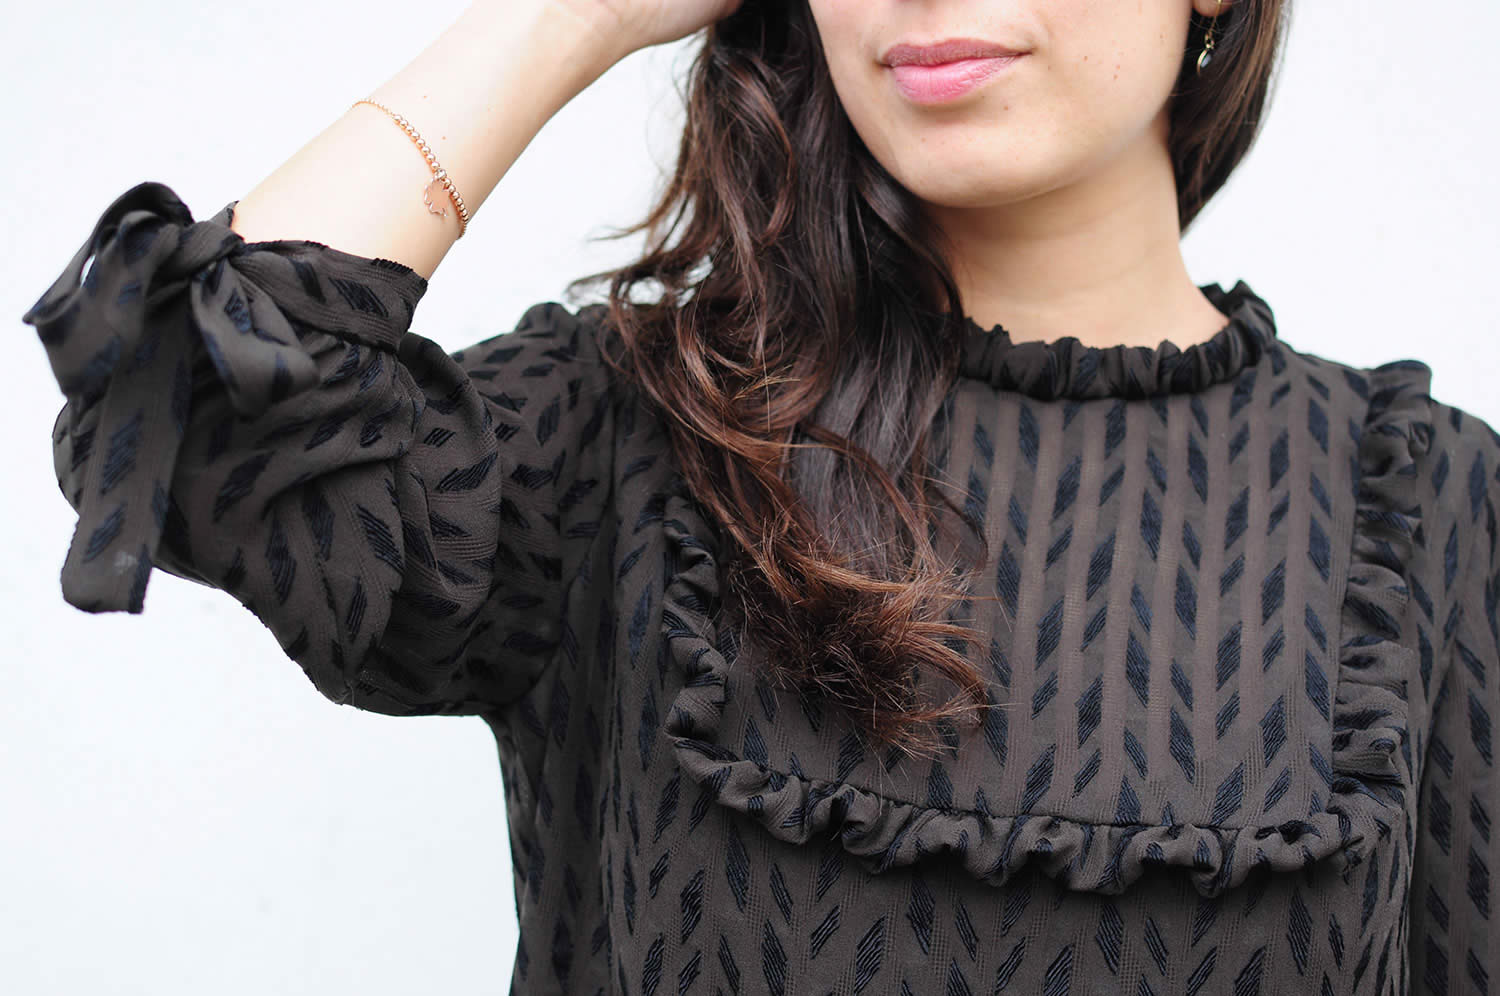 Ladulsatina - Sewing blog - Blog di cucito - Jolanda blusa by Atelier Vicolo n 6 in silk viscose blend - Details